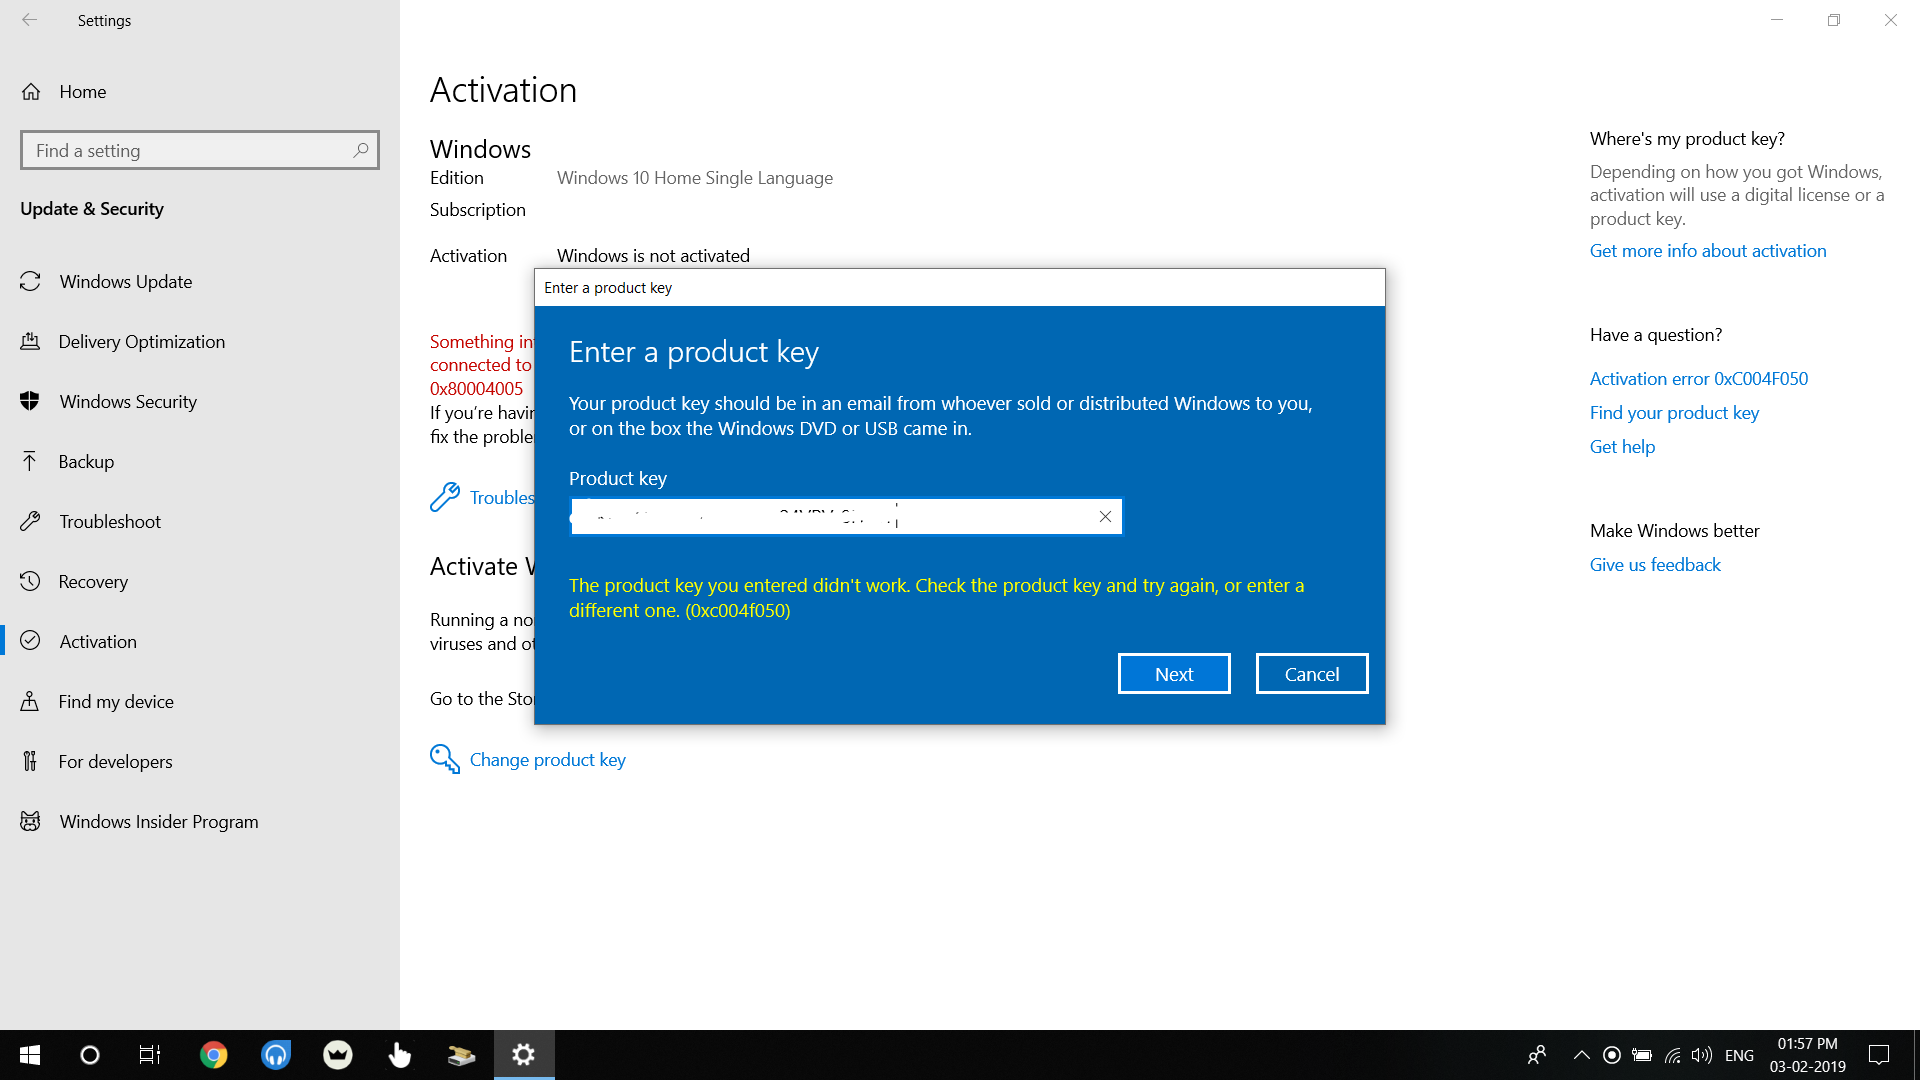 Windows 10 not activating after update 51aa0506-e53d-4491-b873-146c674cf547?upload=true.png